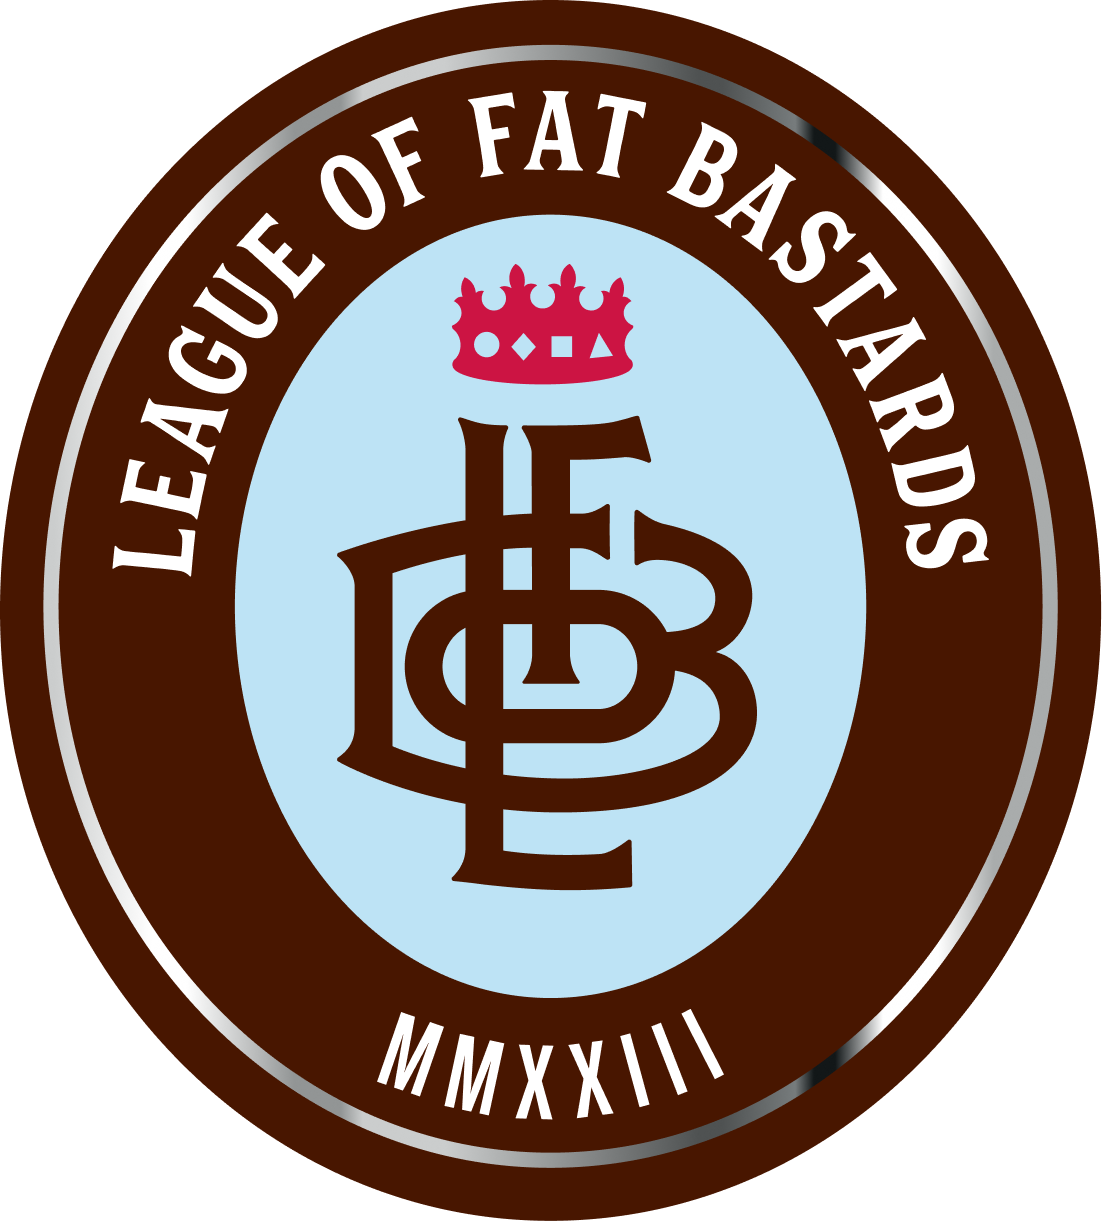 League of Fat Bastards Serie L